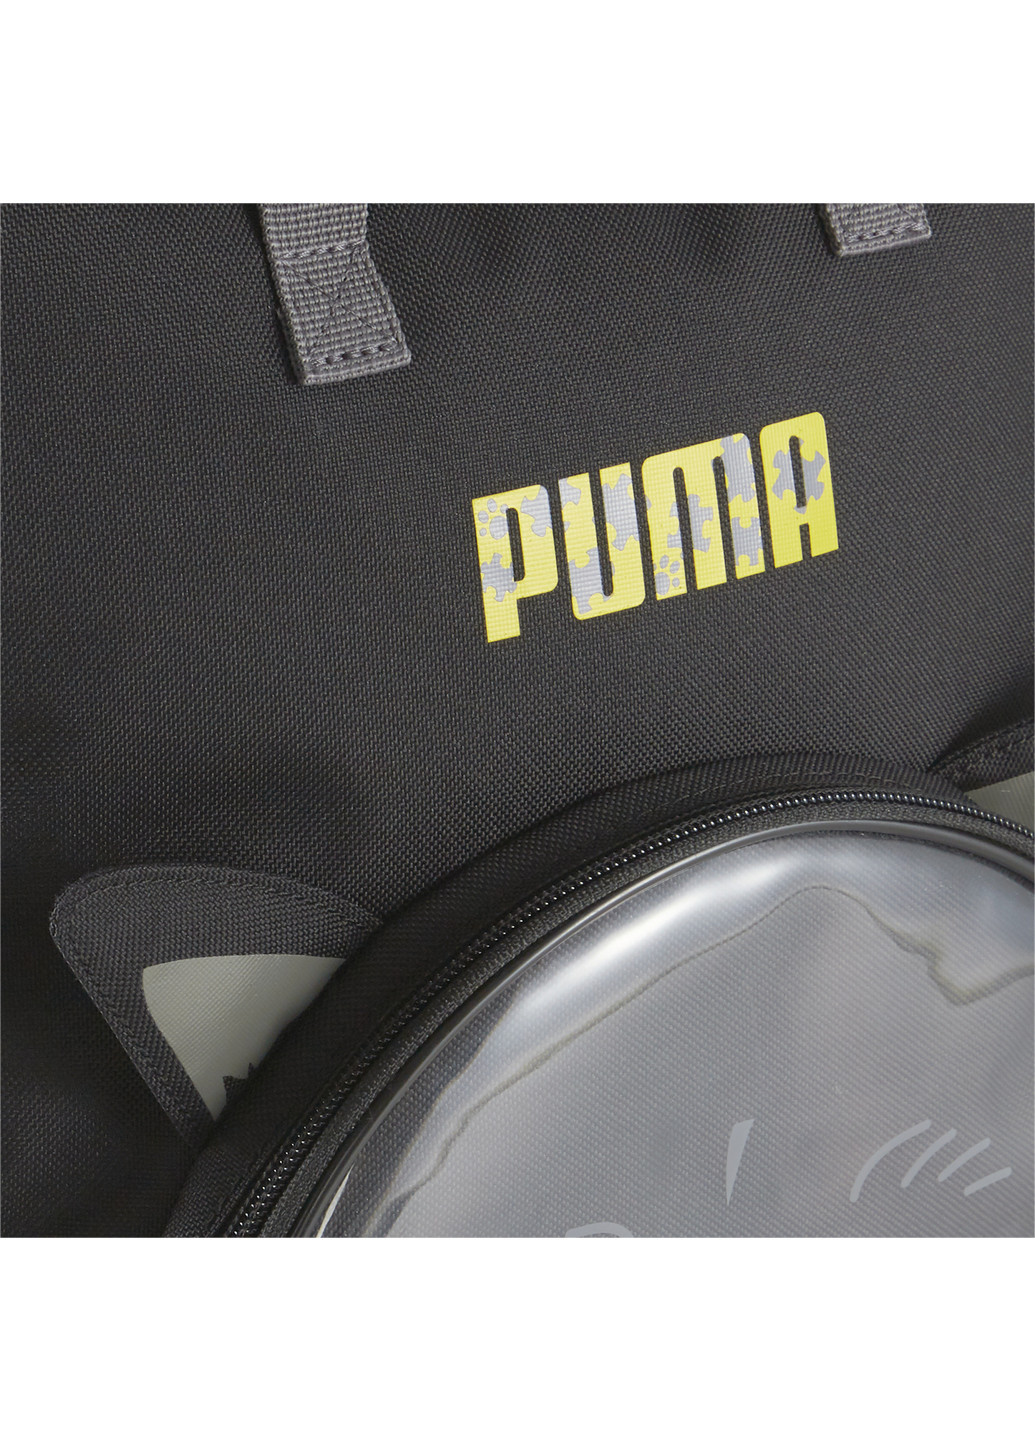 Дитячий рюкзак Animals Youth Backpack Puma (216134268)